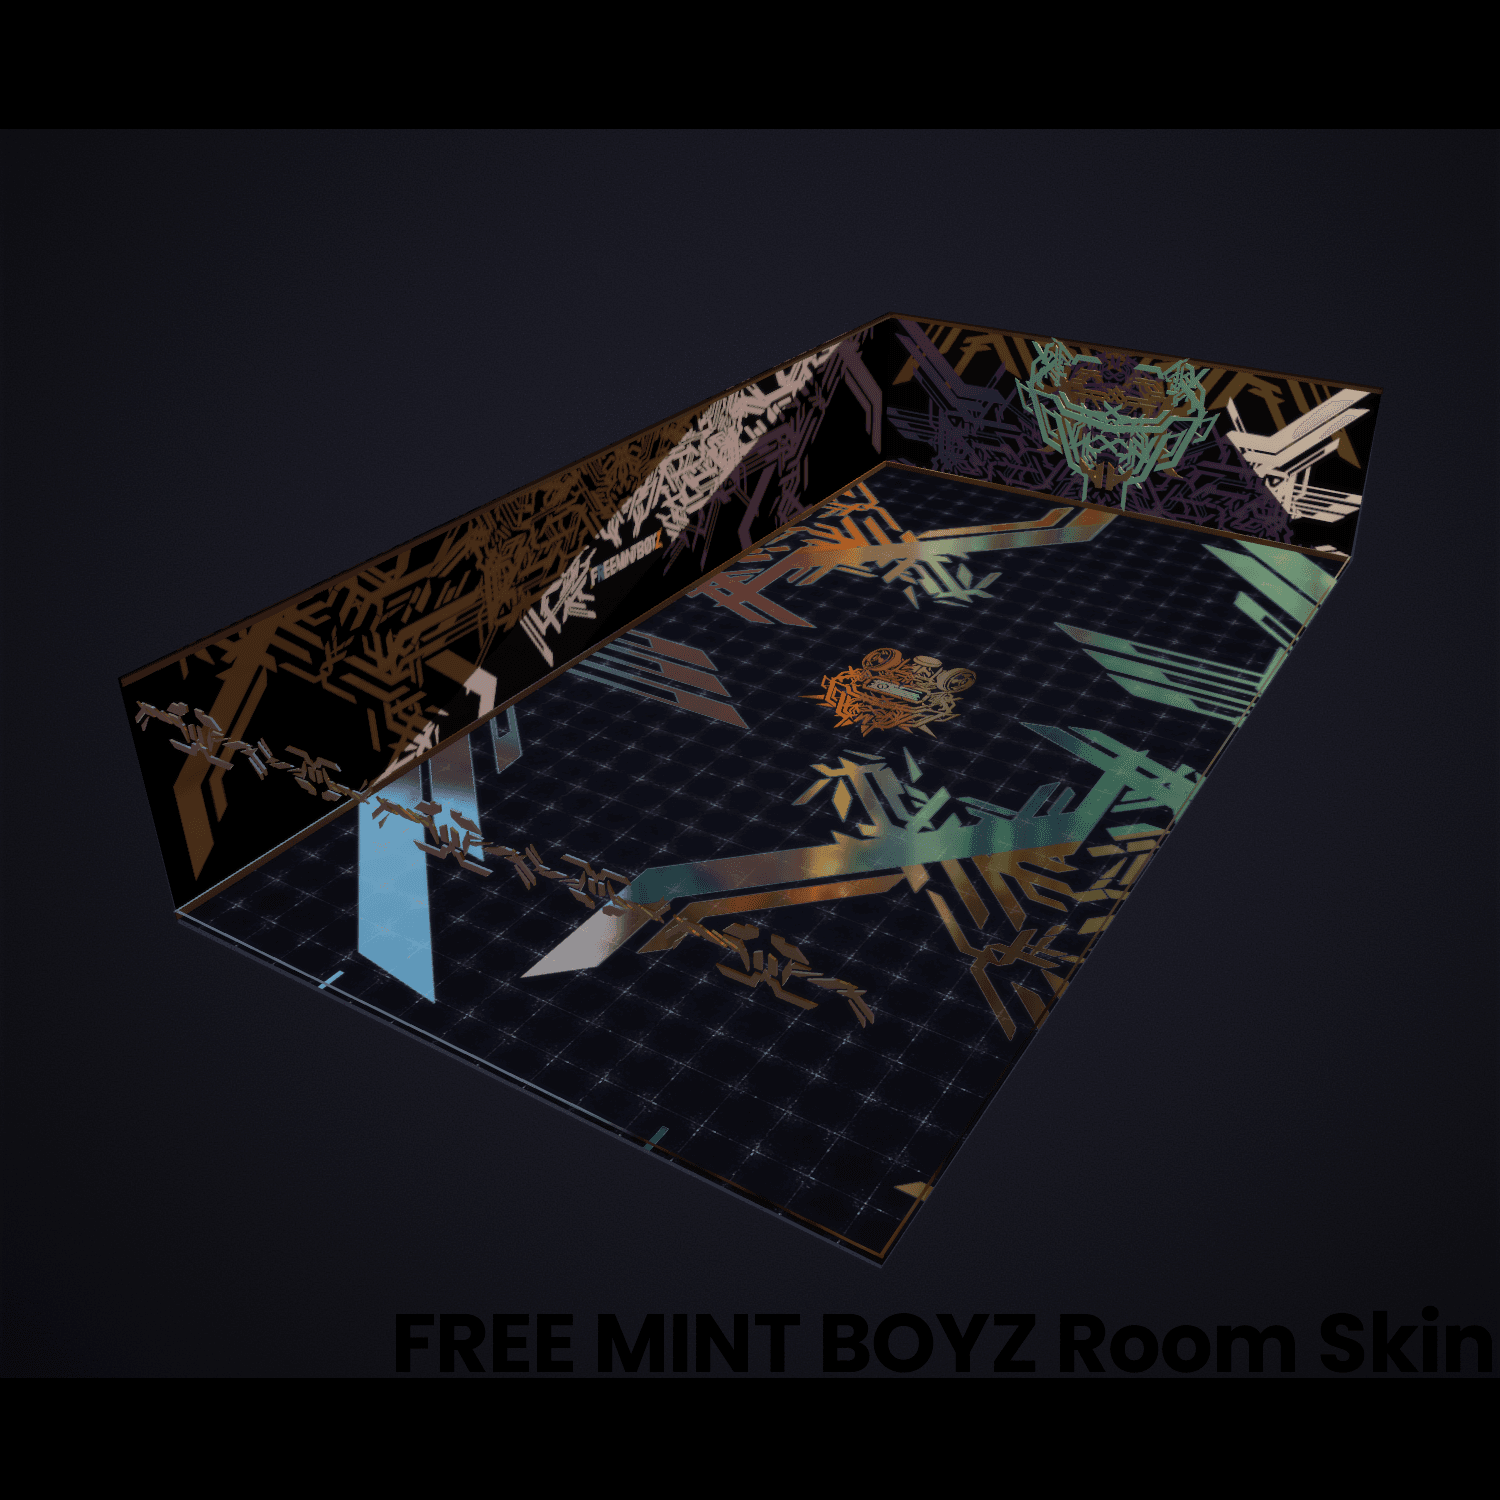 FREE MINT BOYZ room skin - type01